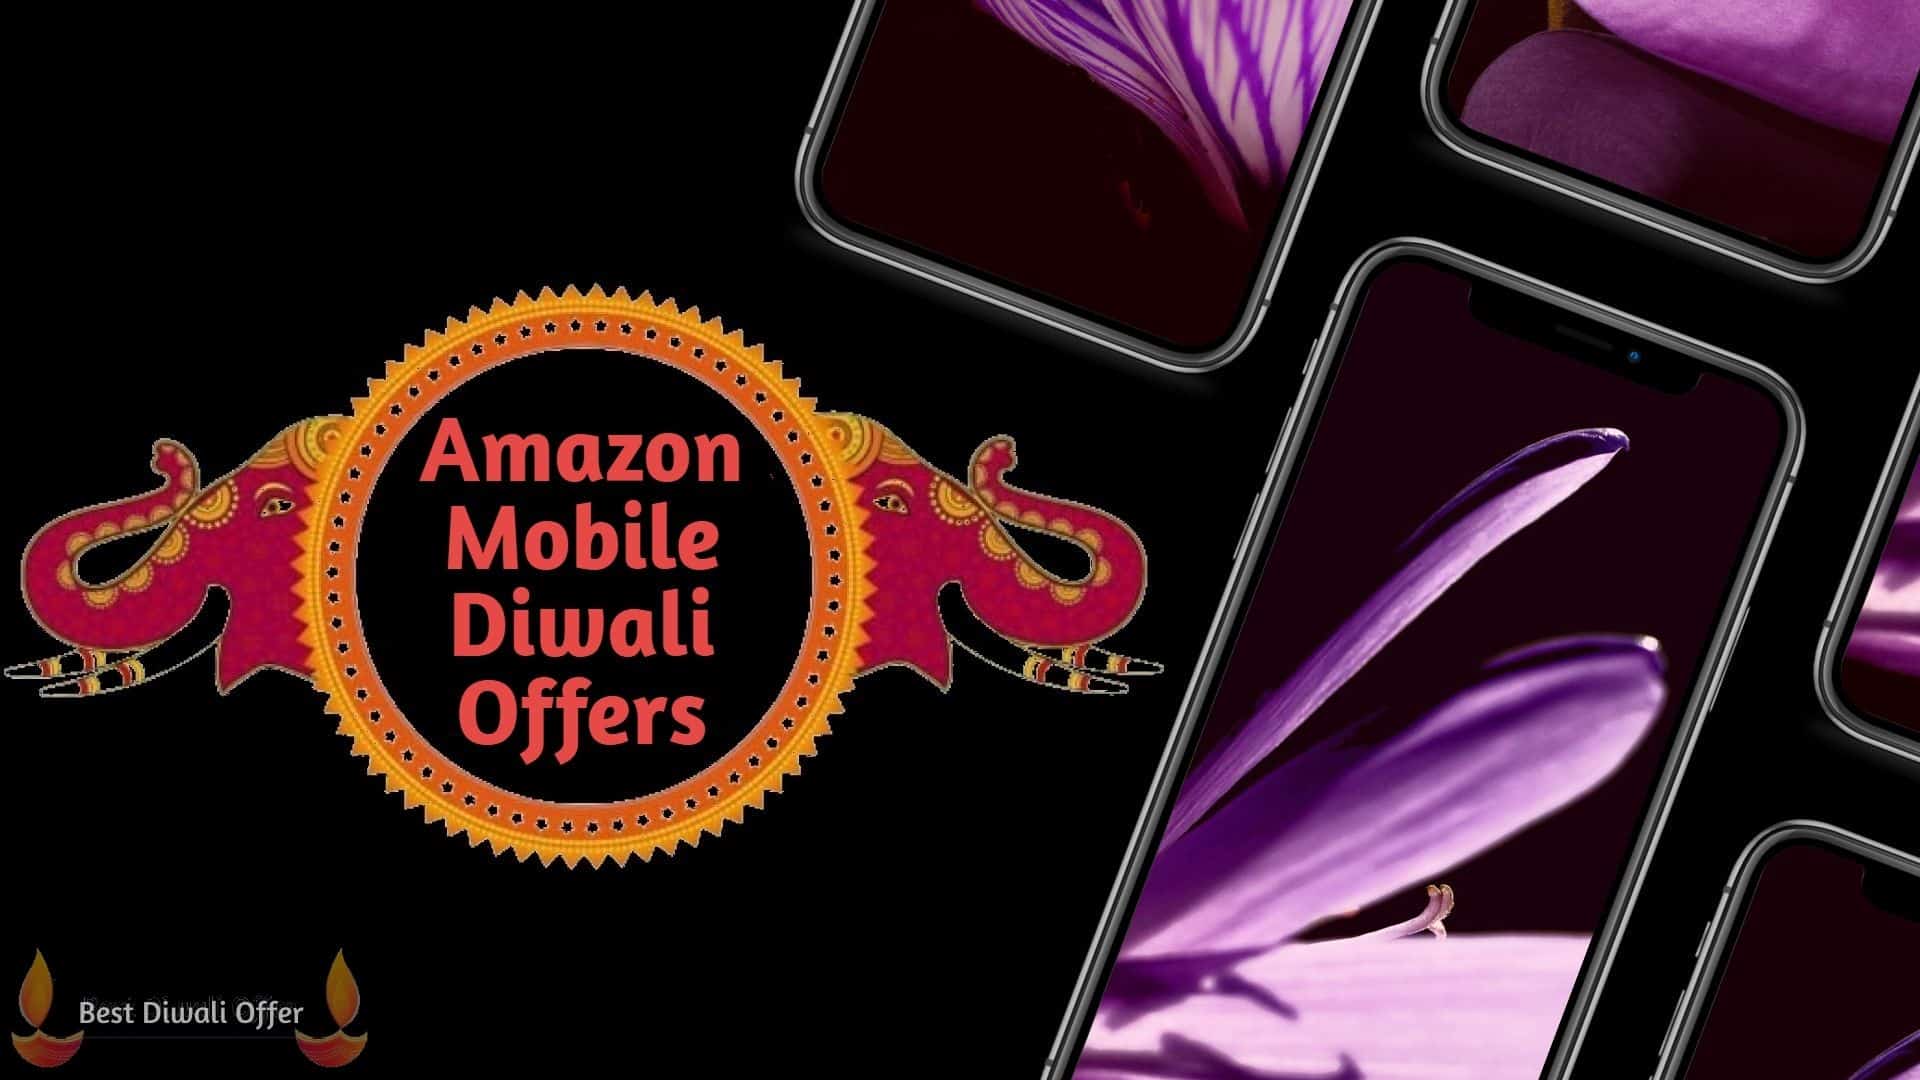 Amazon Mobile Diwali Offers